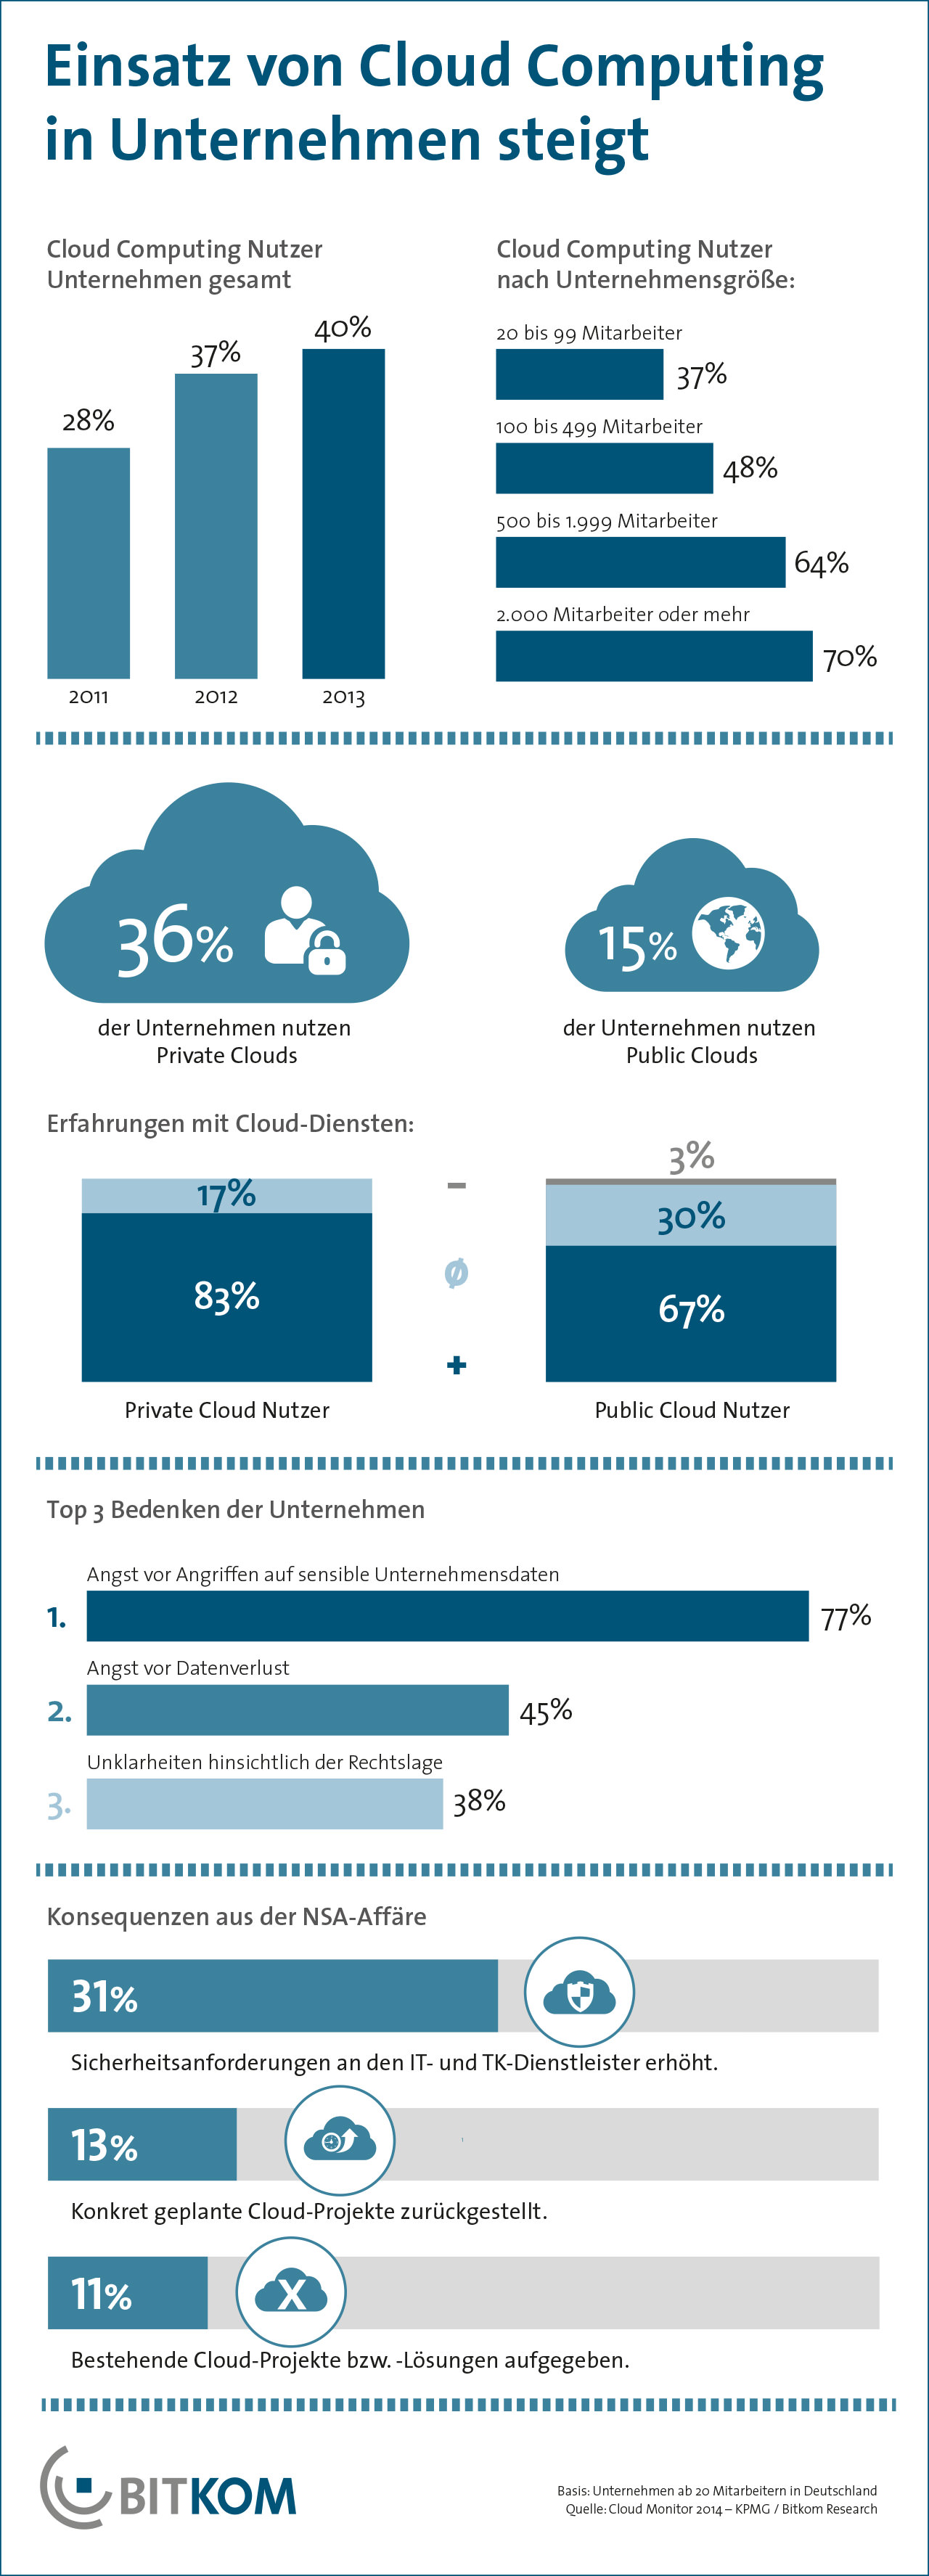 Cloud Computing Statistik 2014 der Bitkom